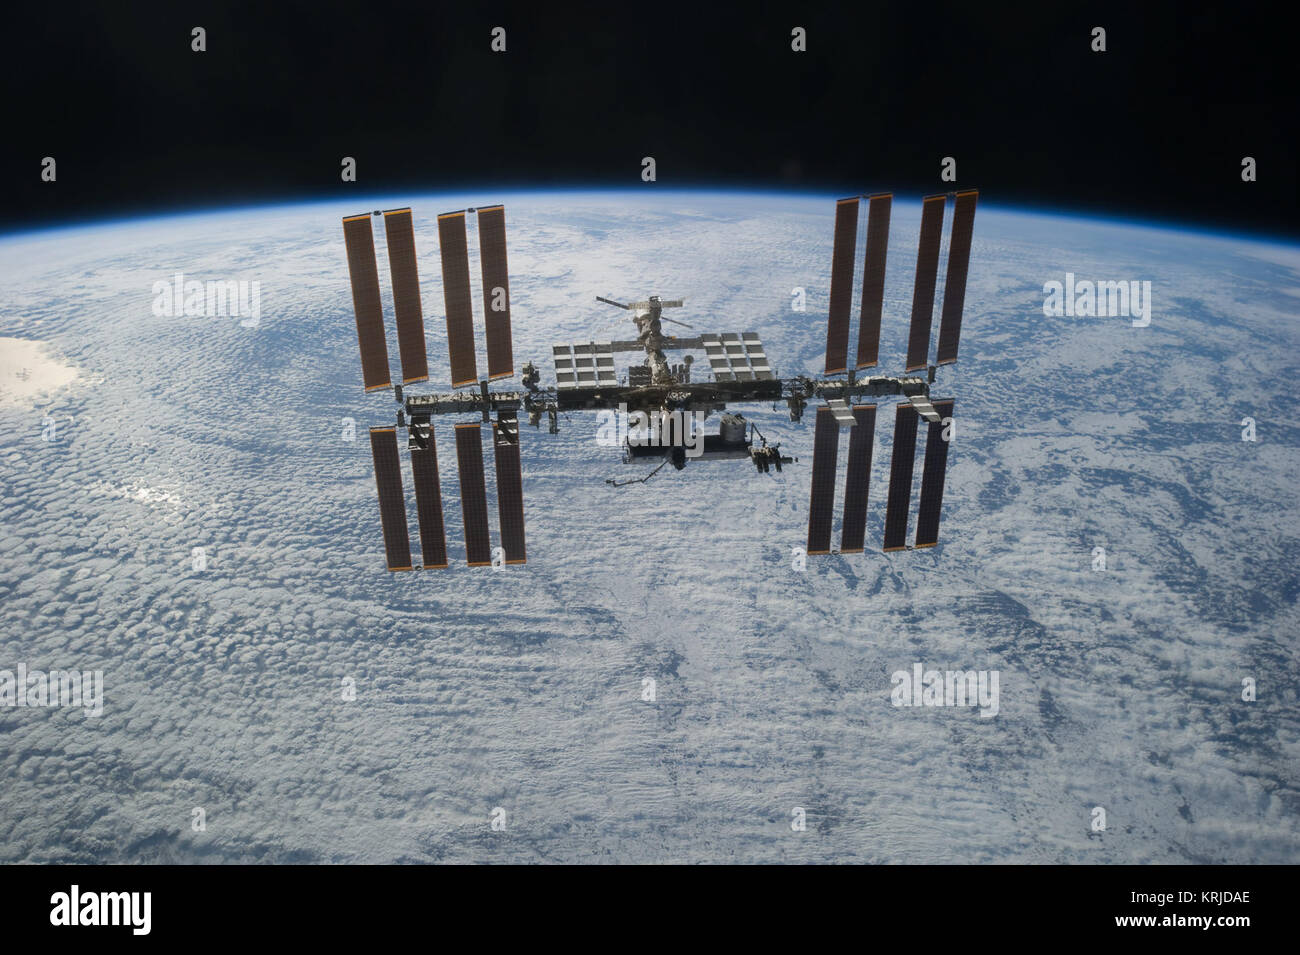 Sts 133 International Space Station After Undocking 2 Stock Photo Alamy